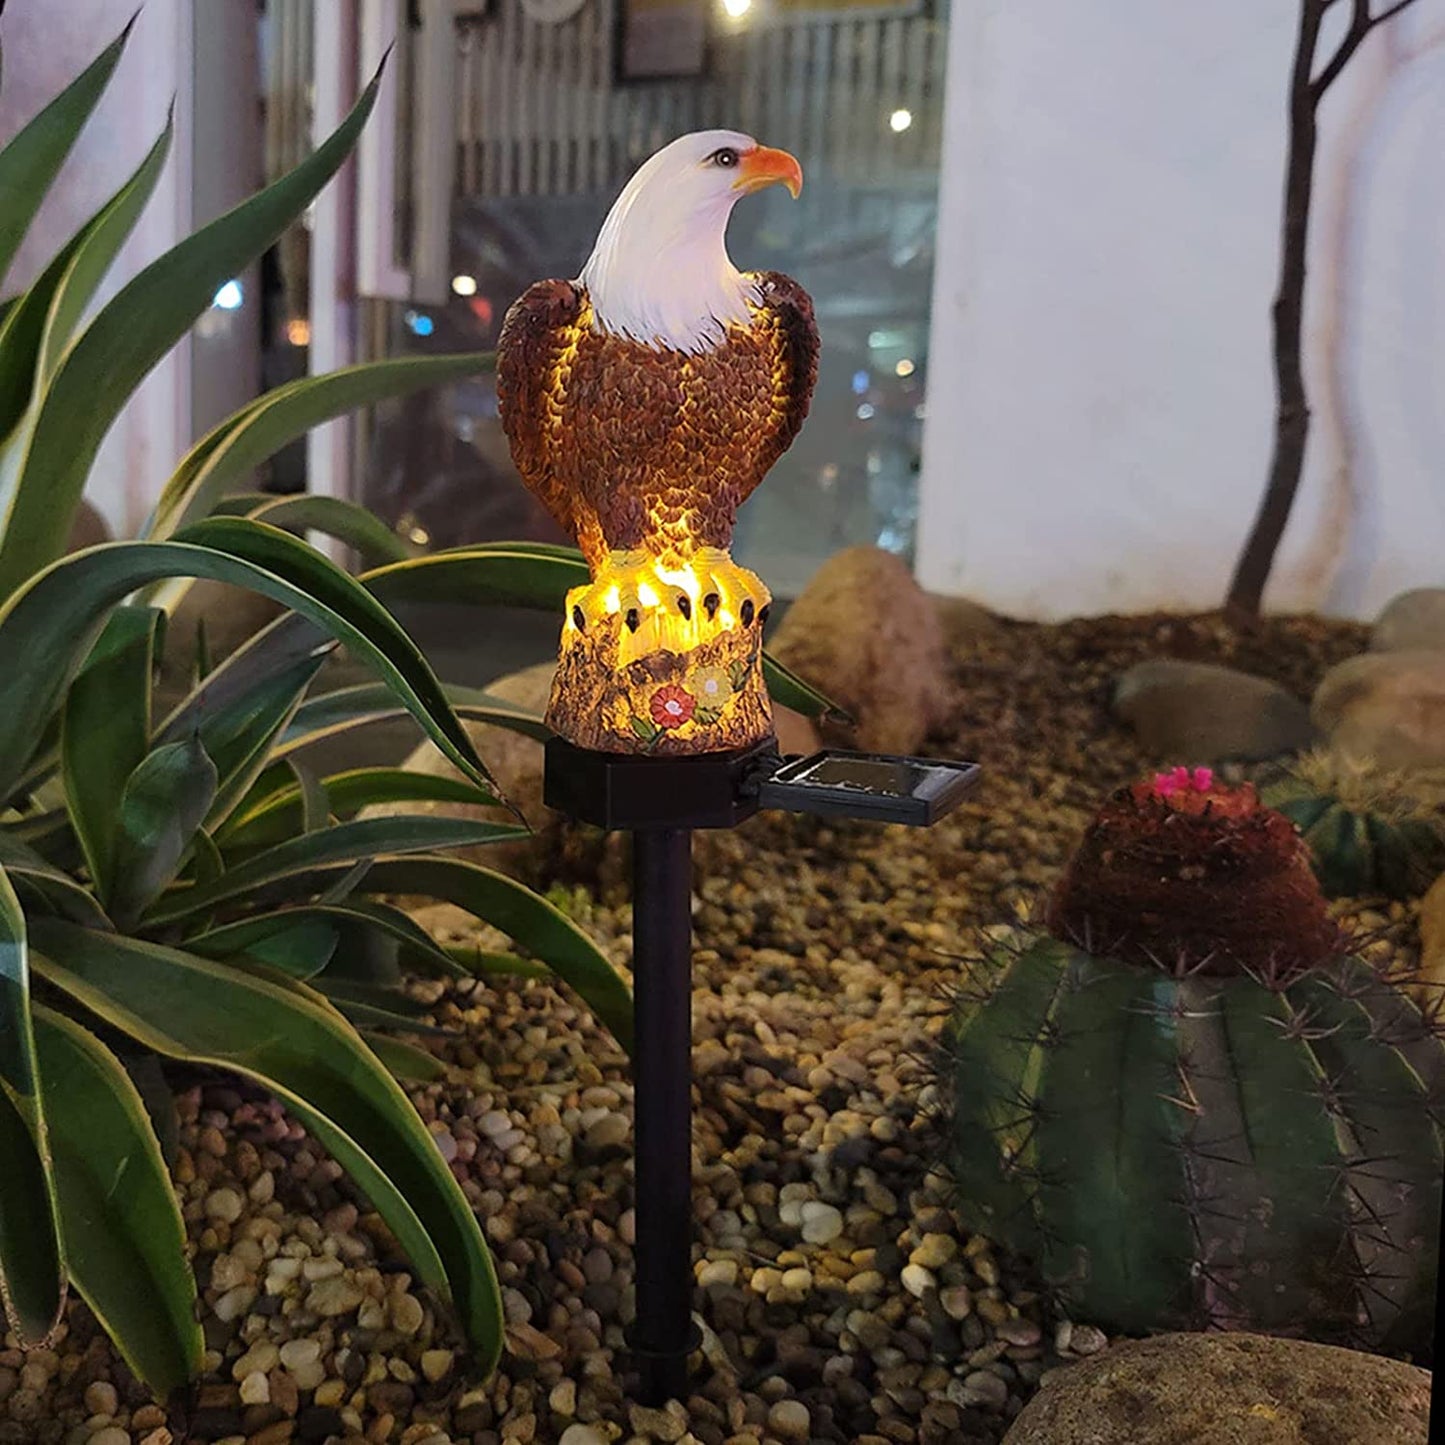 DEDEMCO 17 Inch Eagle Figurine Garden Solar Stake Light,Resin Eagle Solar LED Lights Waterproof,Outdoor Decorative Solar Light Eagle Statue for Patio Yard Decor